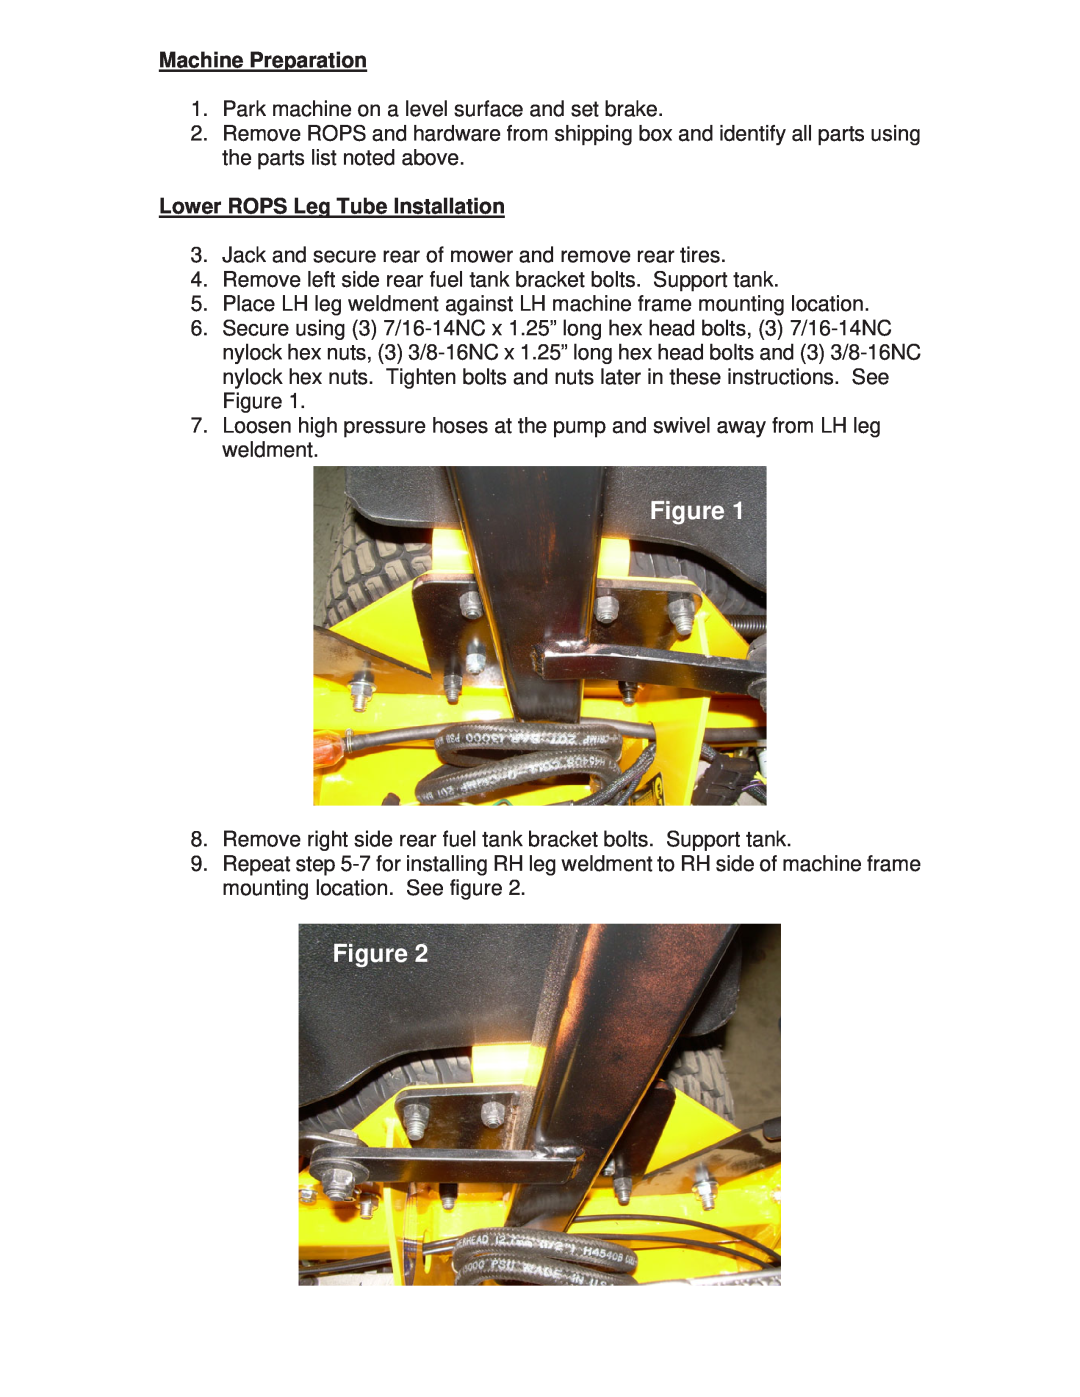 Wright Manufacturing 98210001 operation manual Machine Preparation, Lower ROPS Leg Tube Installation 